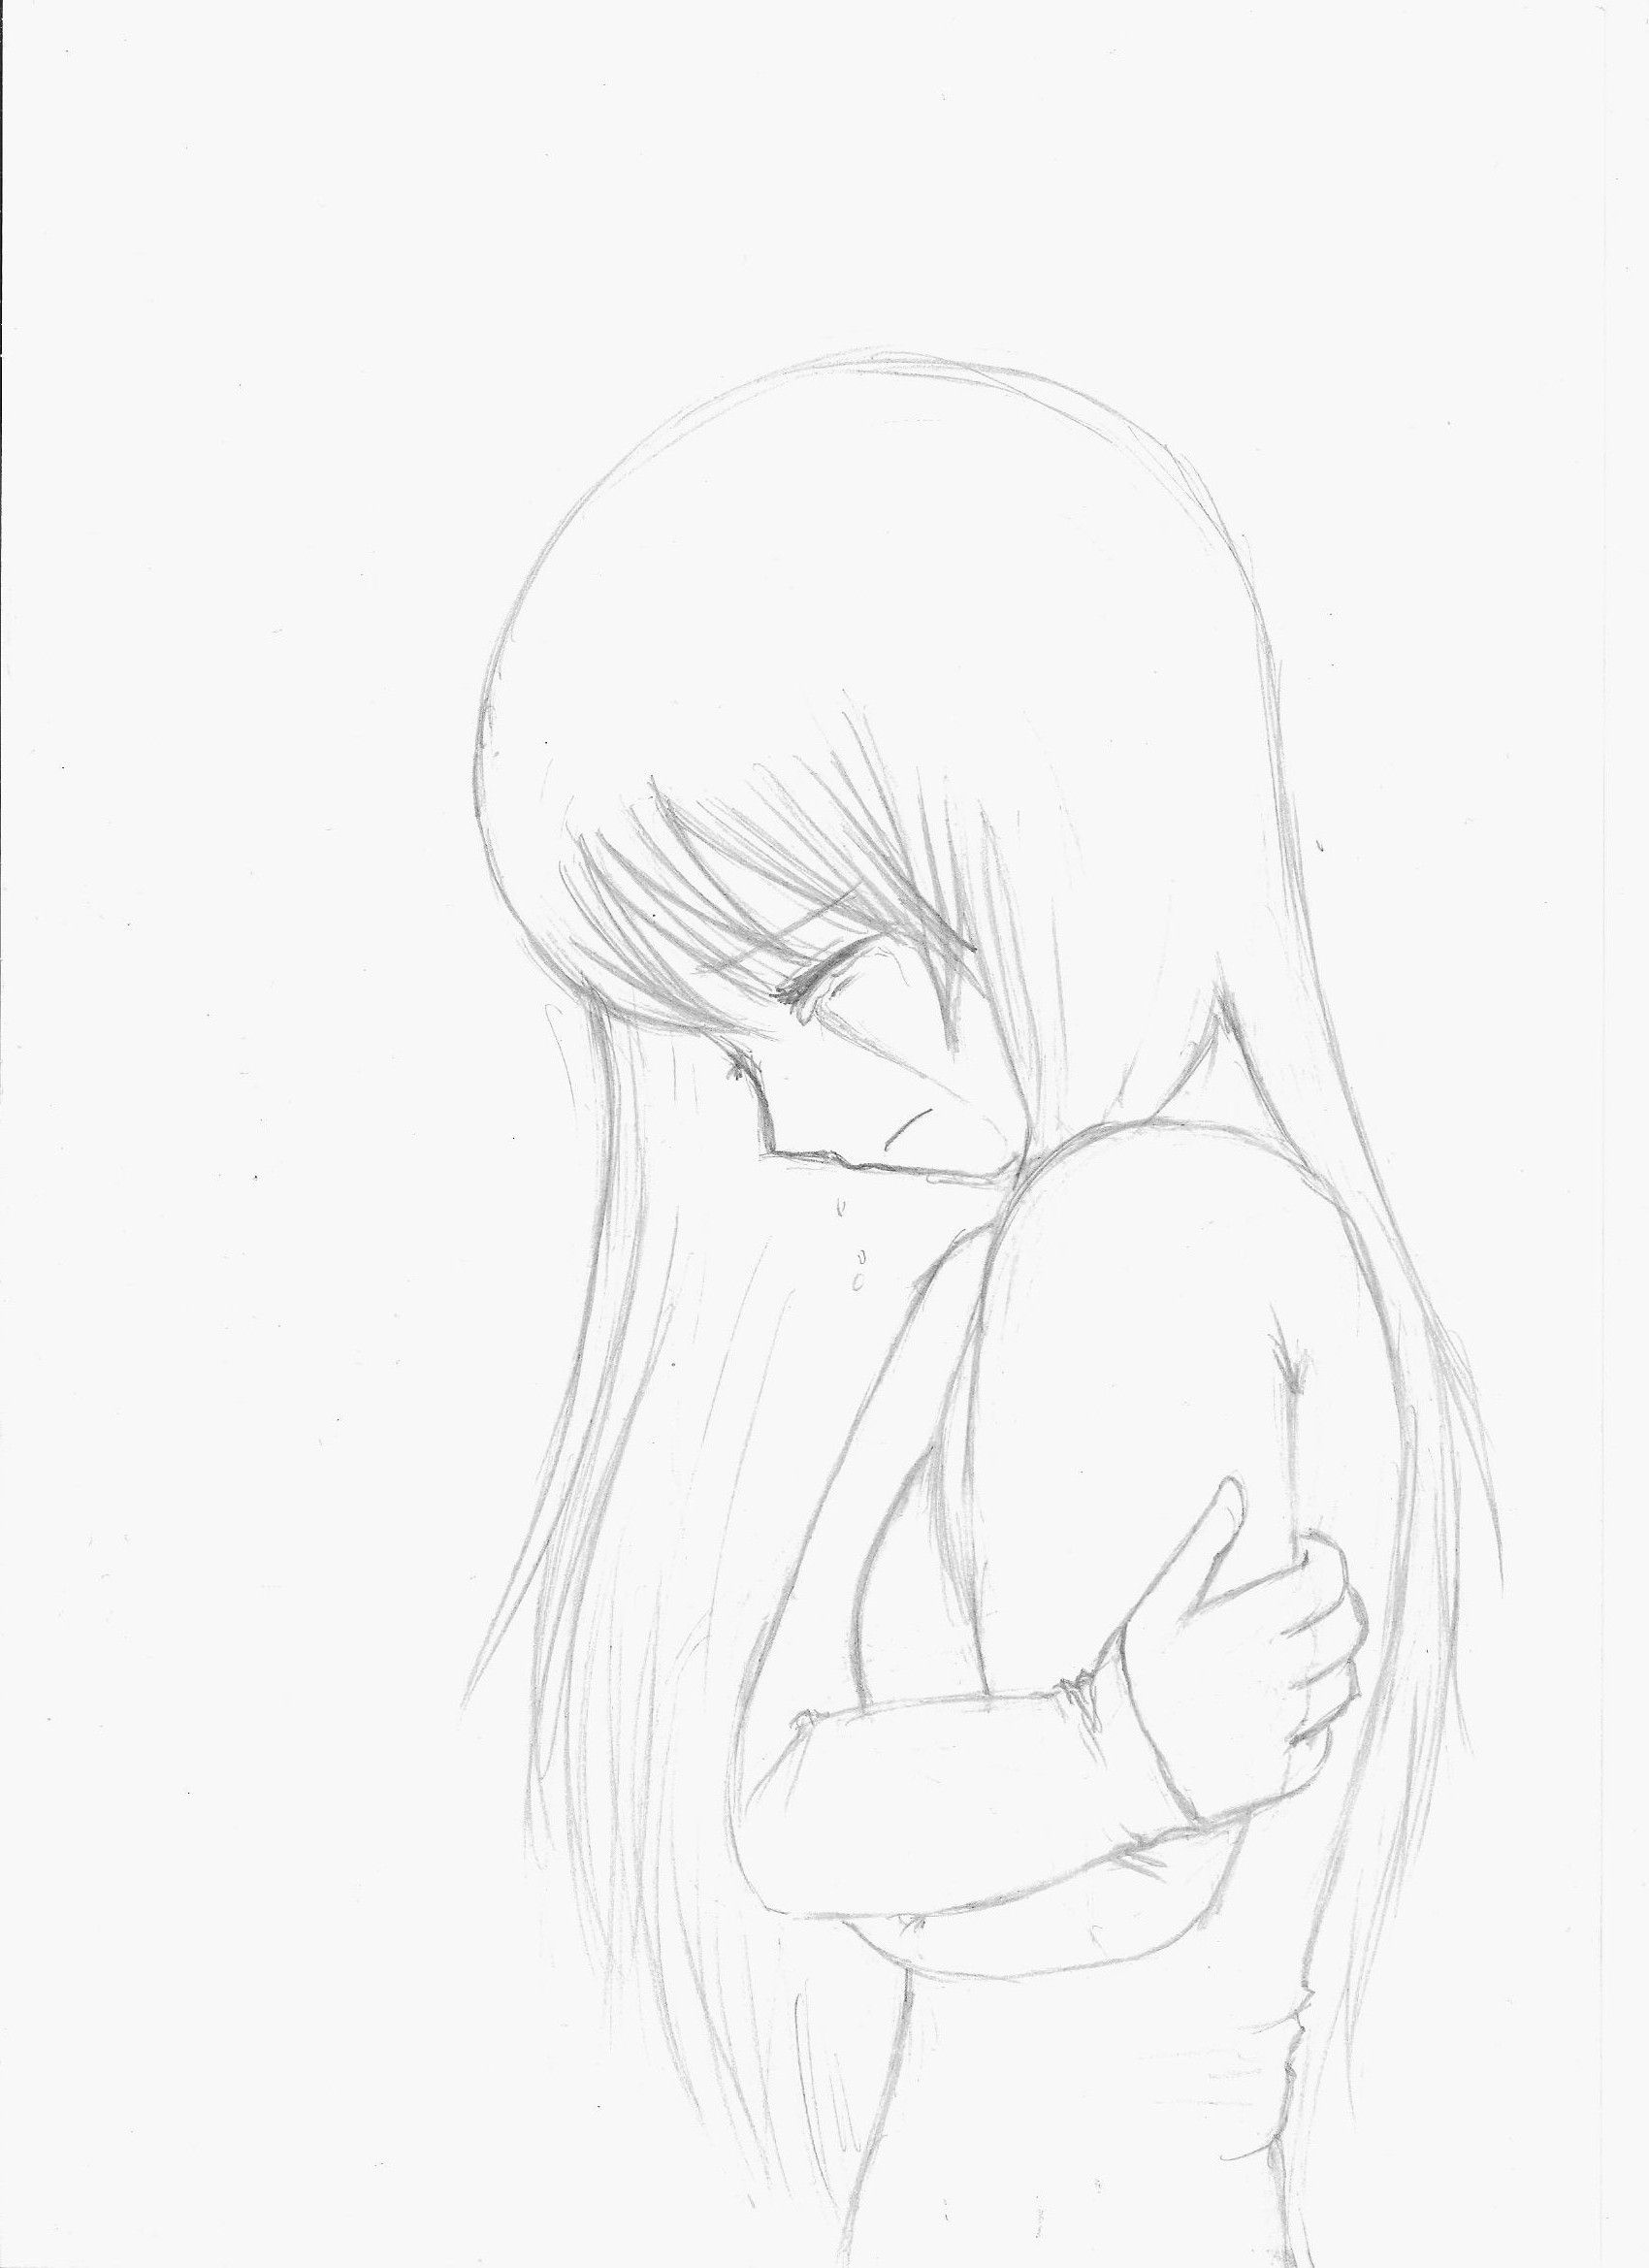 Sad Anime Girl Drawing by kamo103 - DragoArt